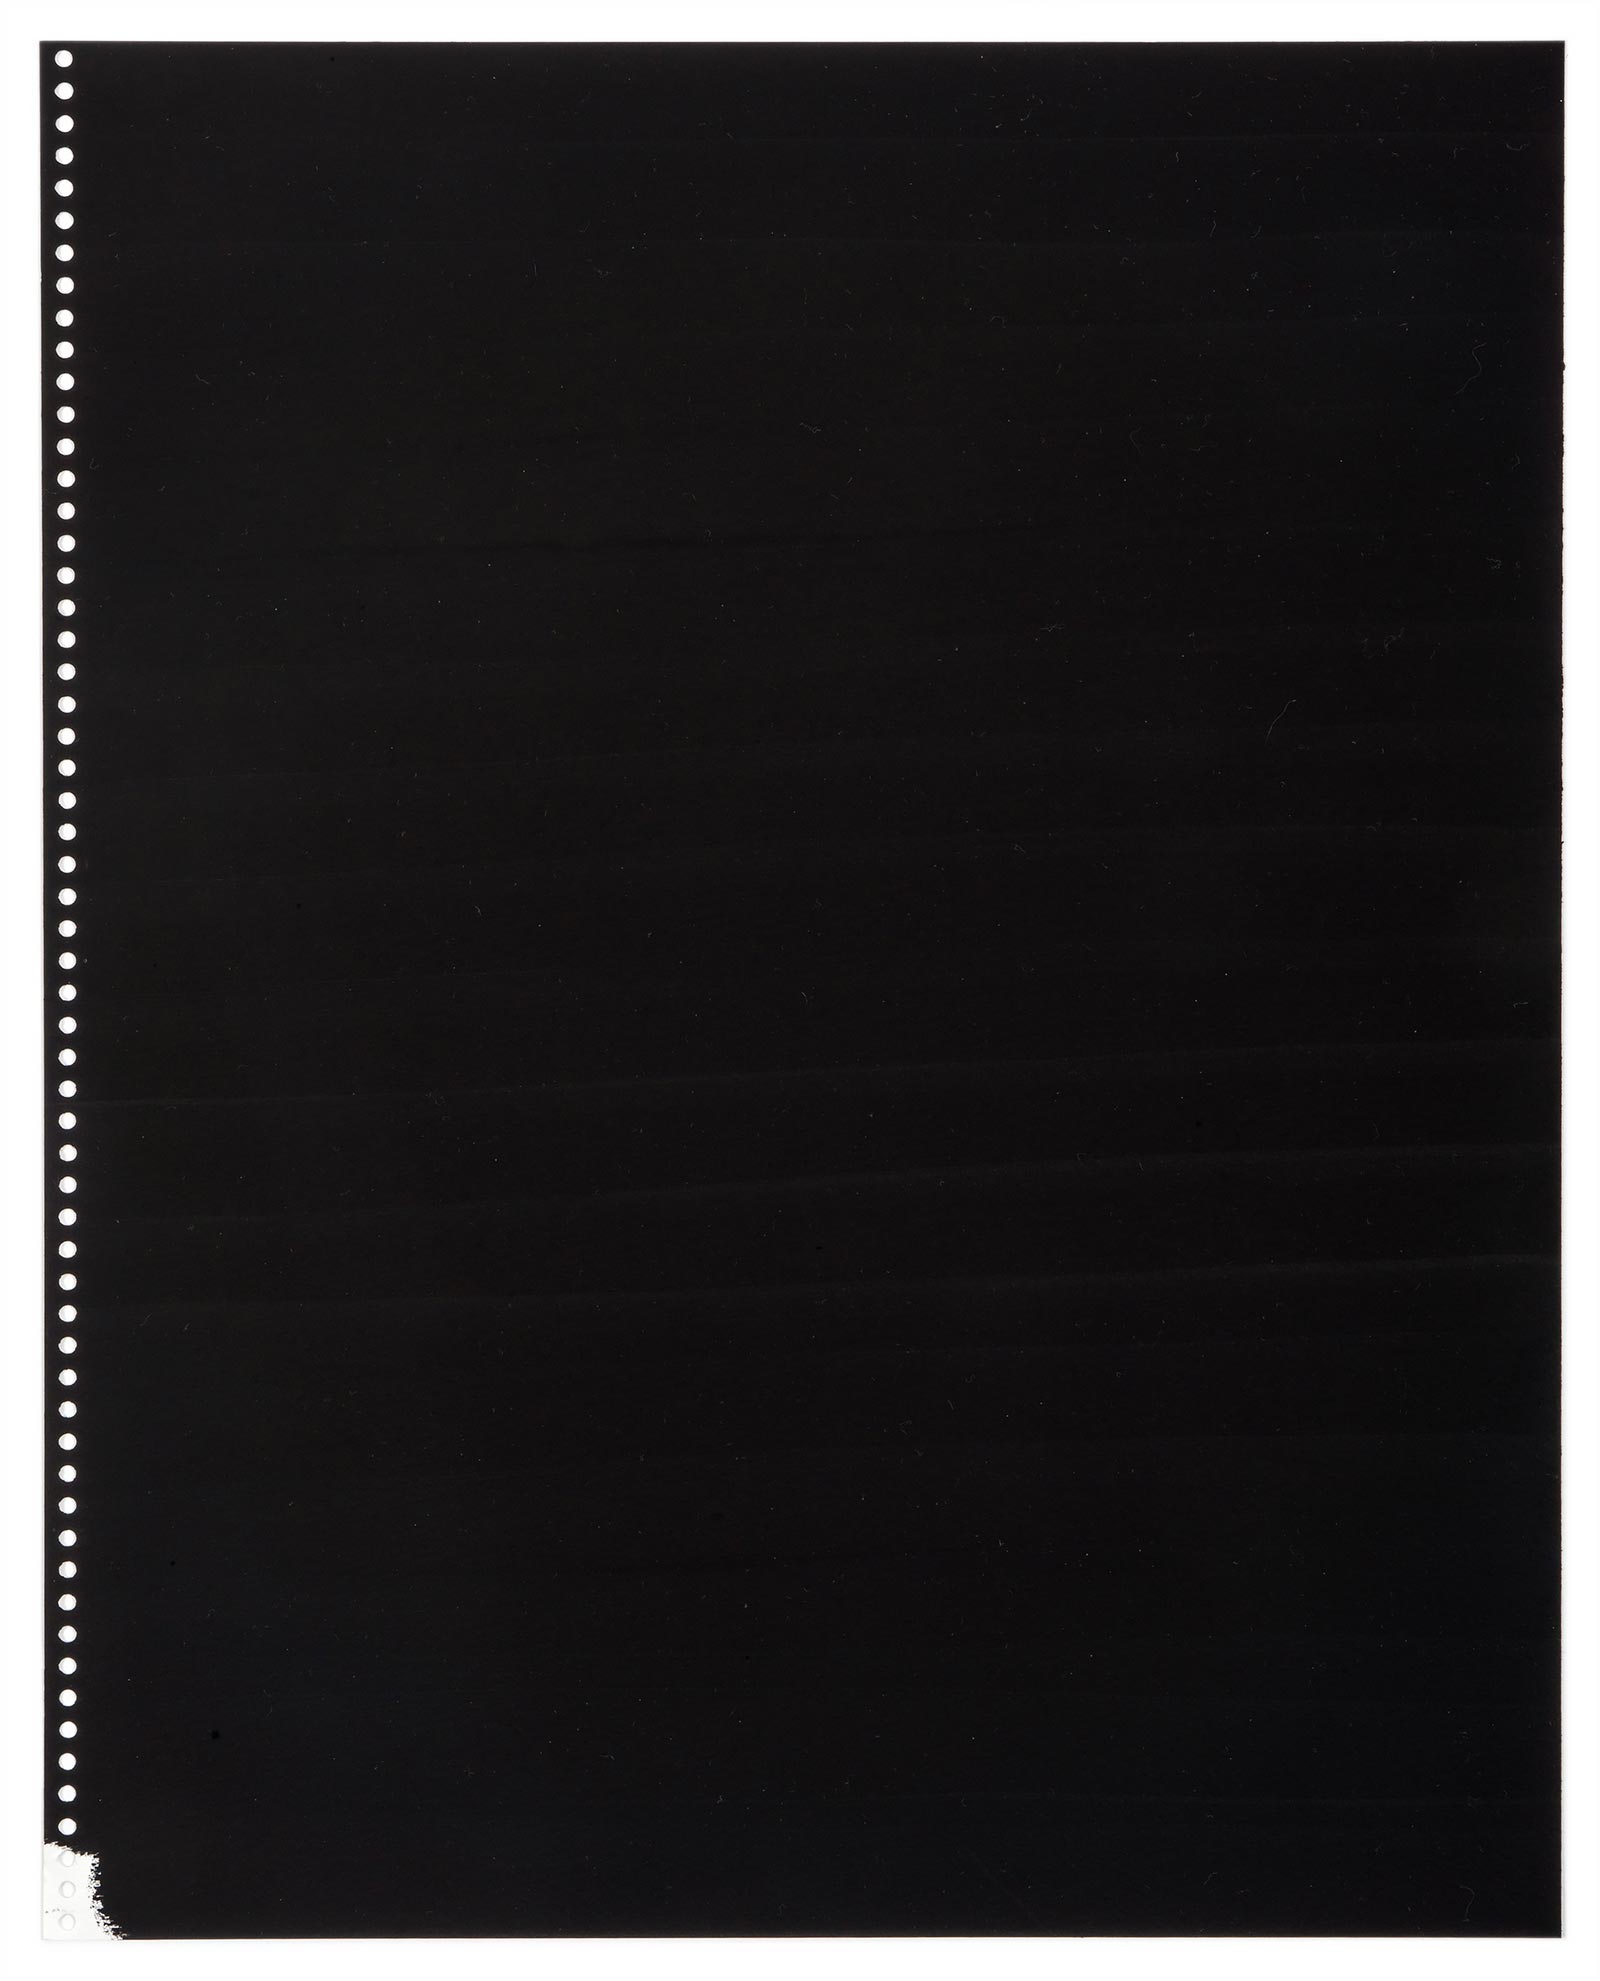 CVVC, Untitled, 2017, Black Mop ink on paper